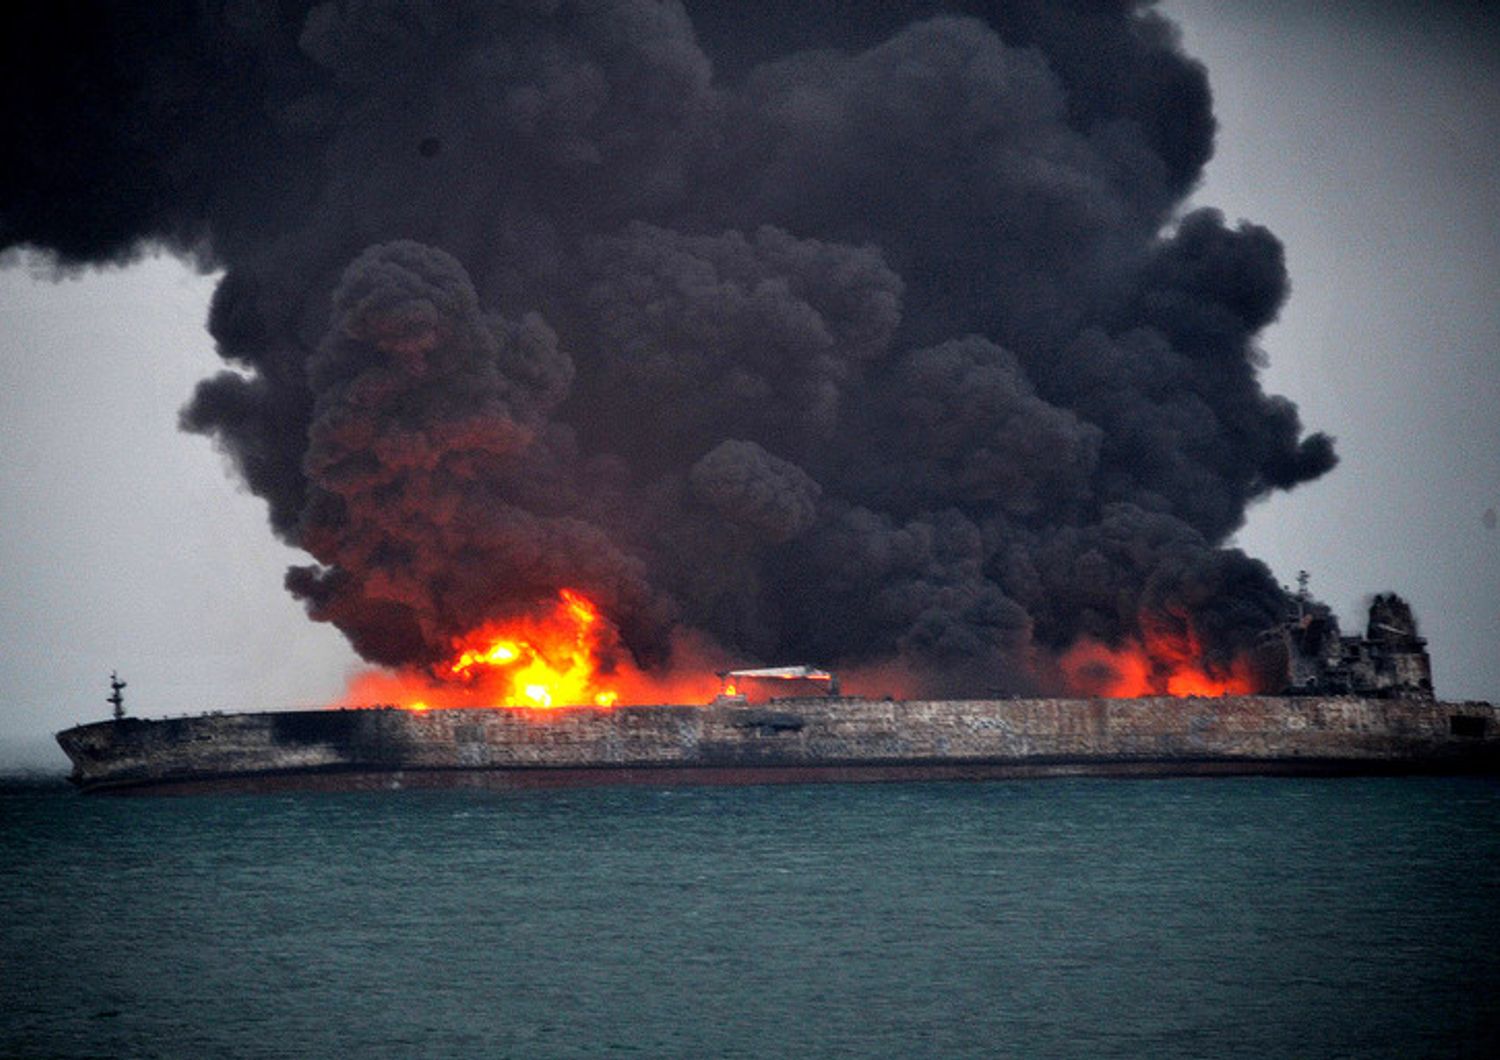 La petroliera iraniana brucia al largo delle coste cinesi meridionali